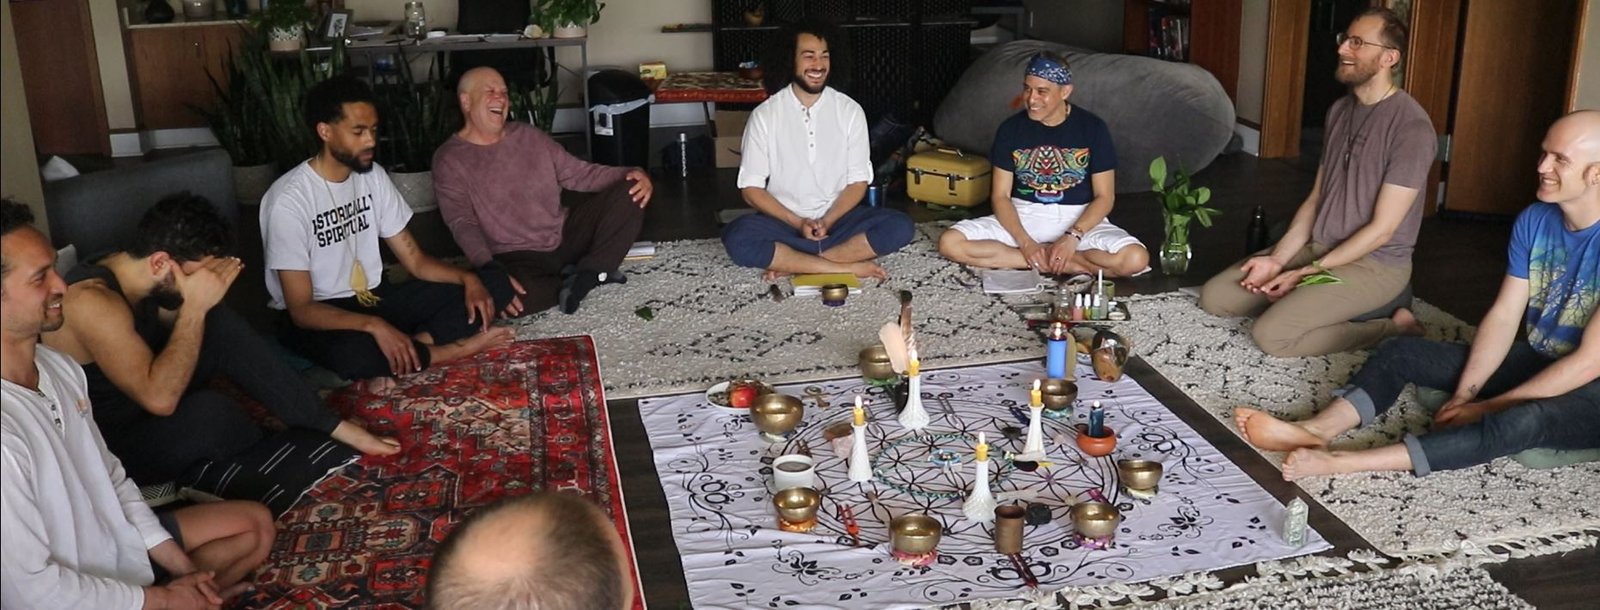 Building Brotherhood | Group Meditation Event